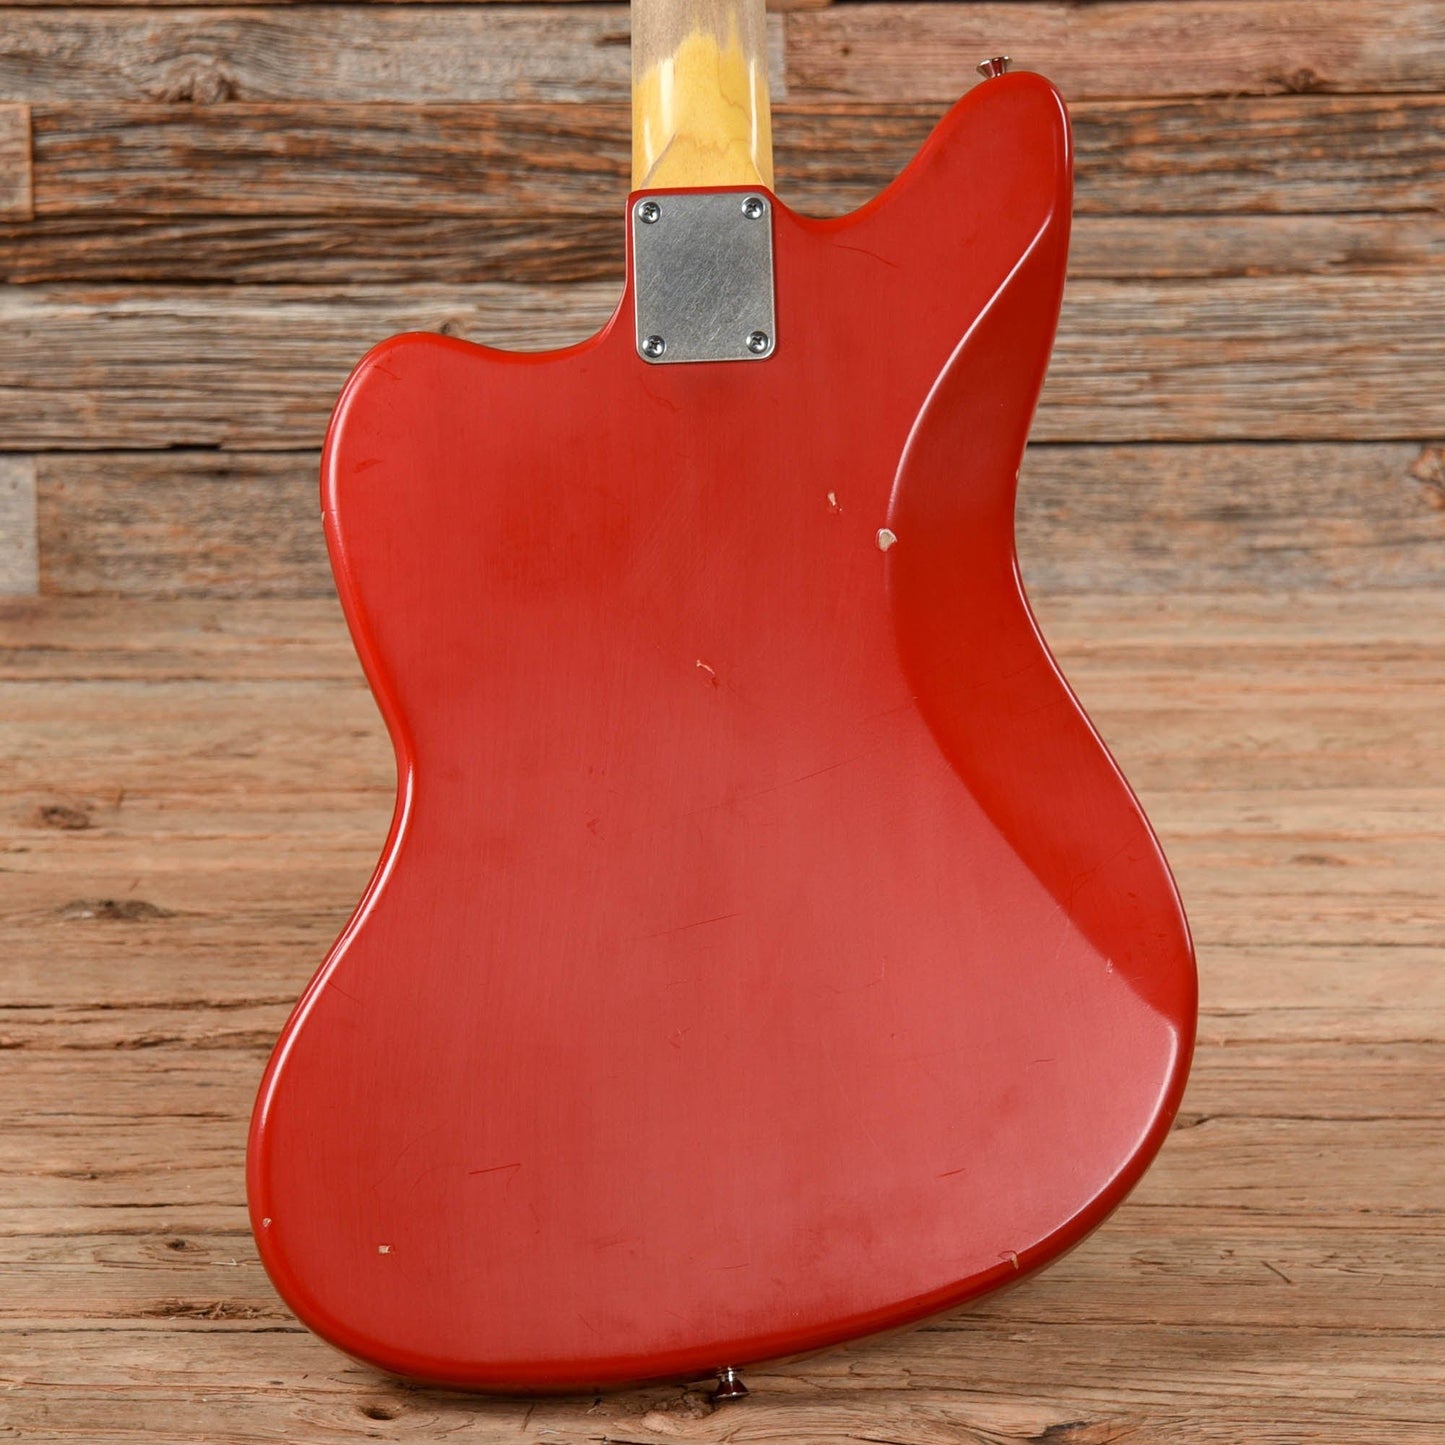 Nash JG-63 Dakota Red Electric Guitars / Solid Body